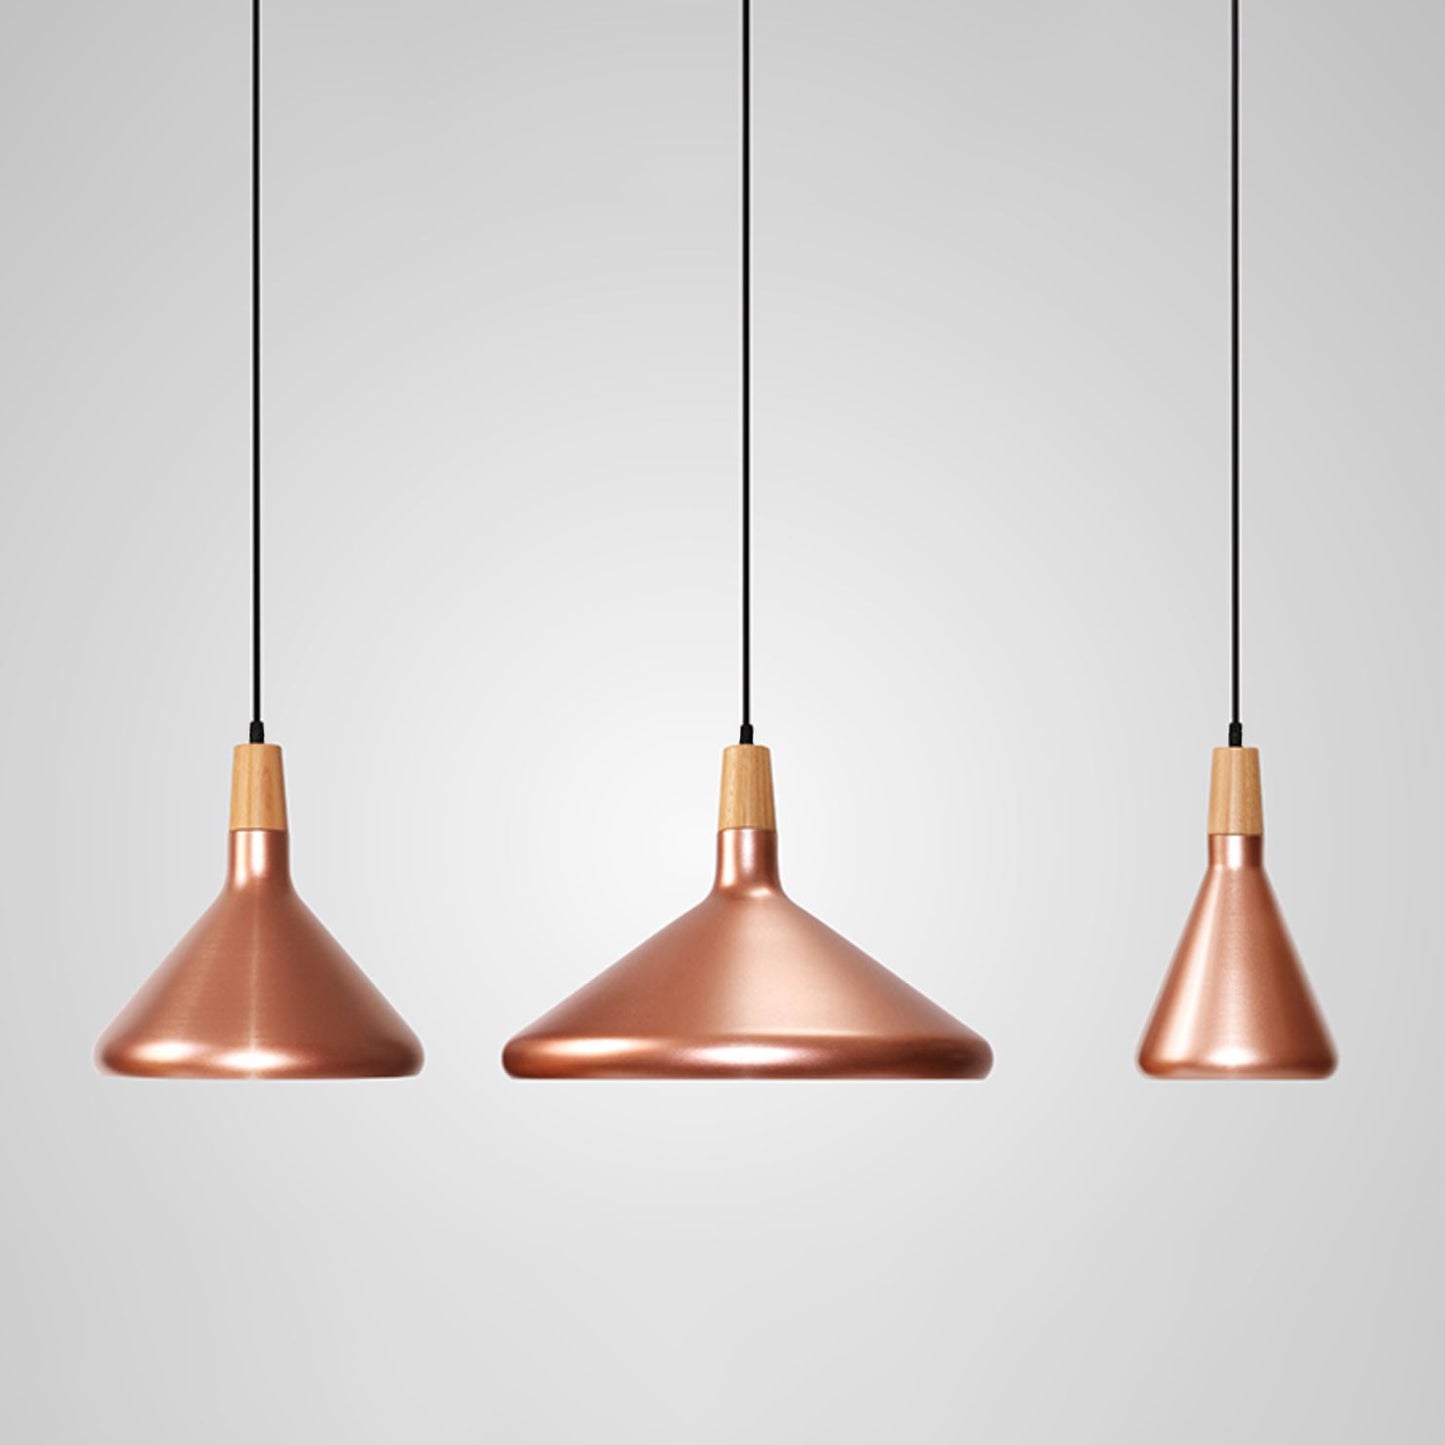 Kopar Minimalist Copper Brass Coloured Shade And Wooden Pendant Light